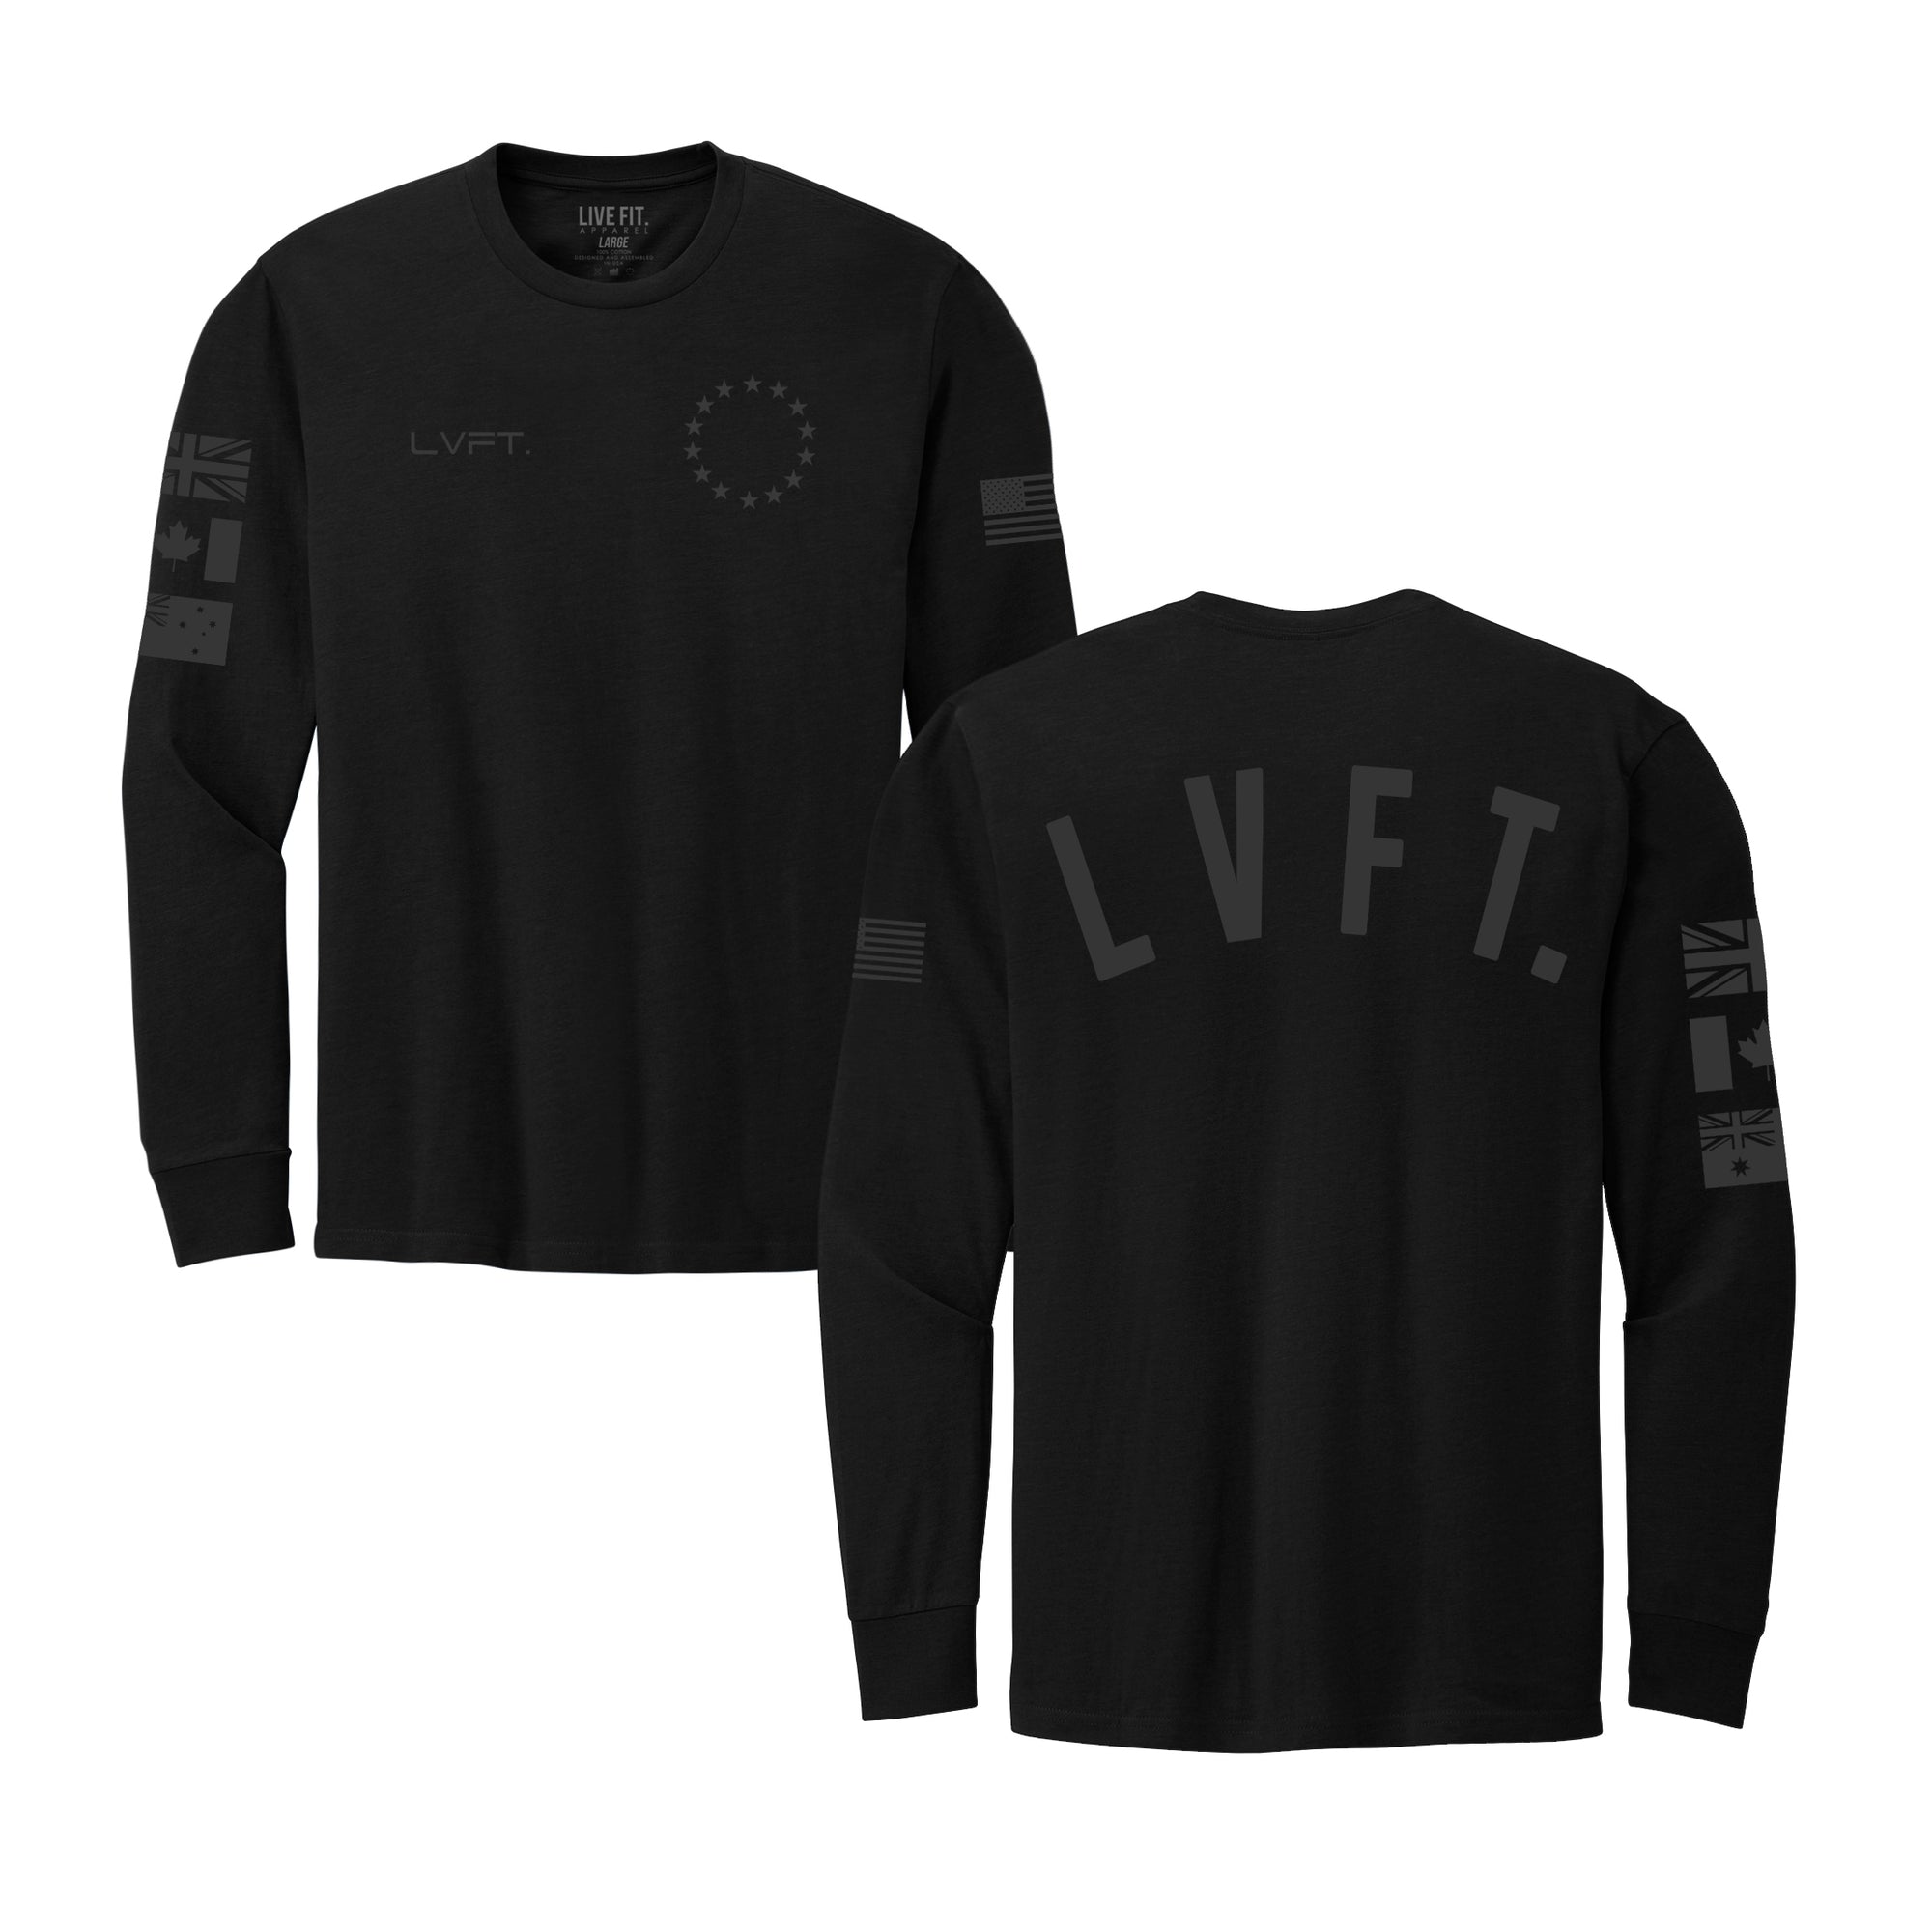 Live Fit LVFT T-shirt Mens Size M Short Sleeve Athletic Gym Black